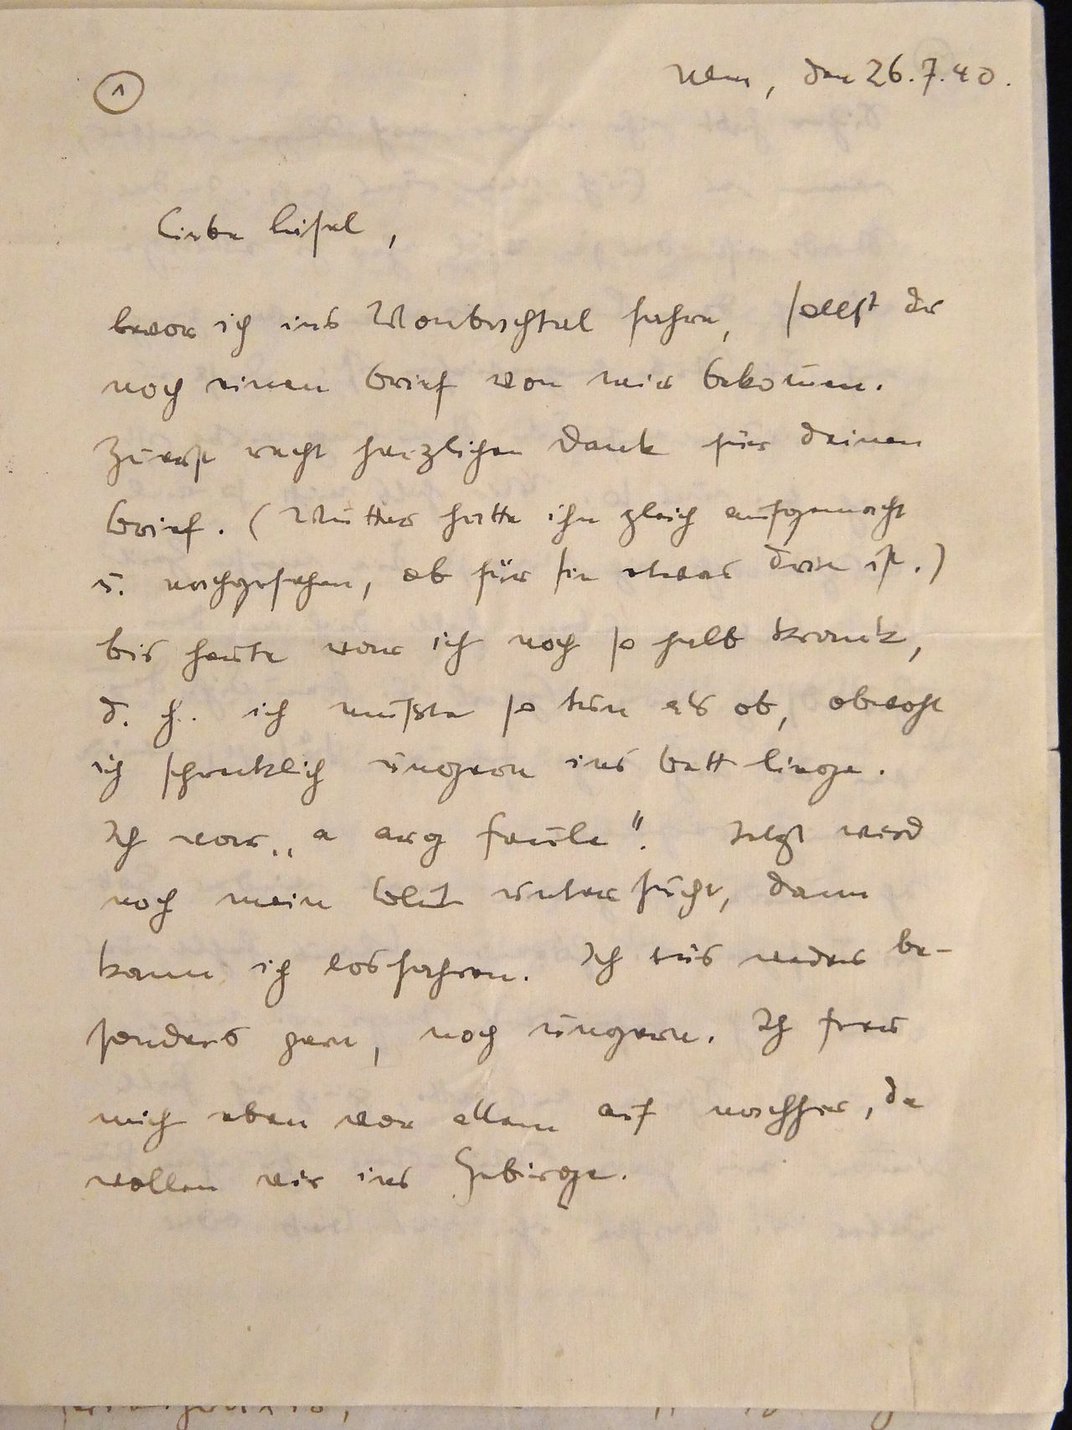 A letter written by Sophie Scholl to a friend in 1940